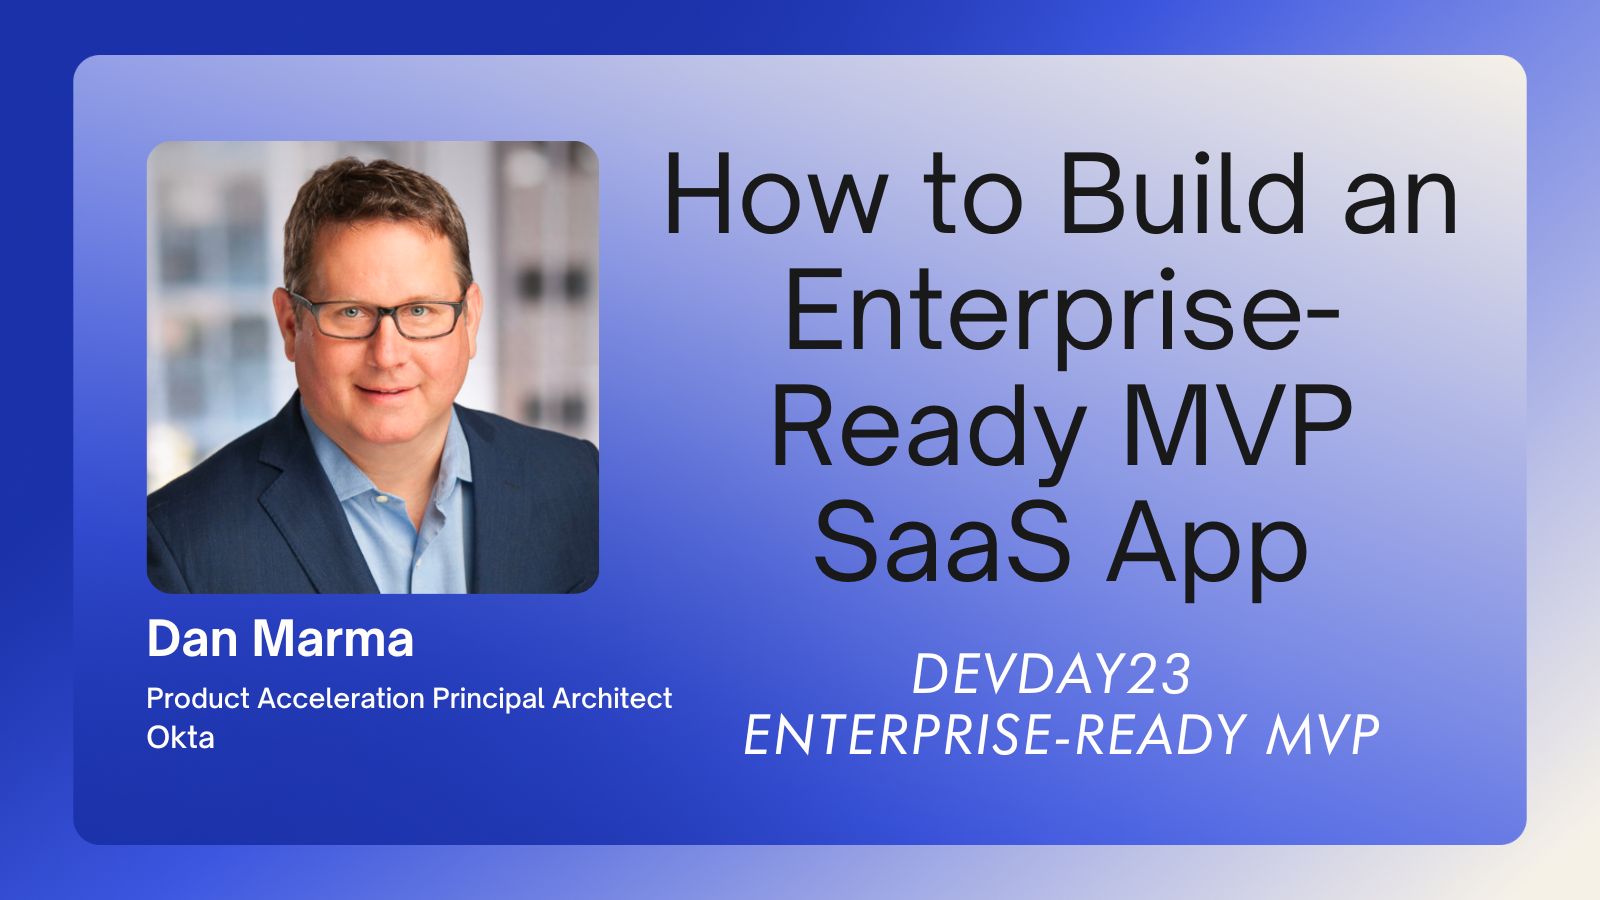 How to Build an Enterprise-Ready MVP SaaS App